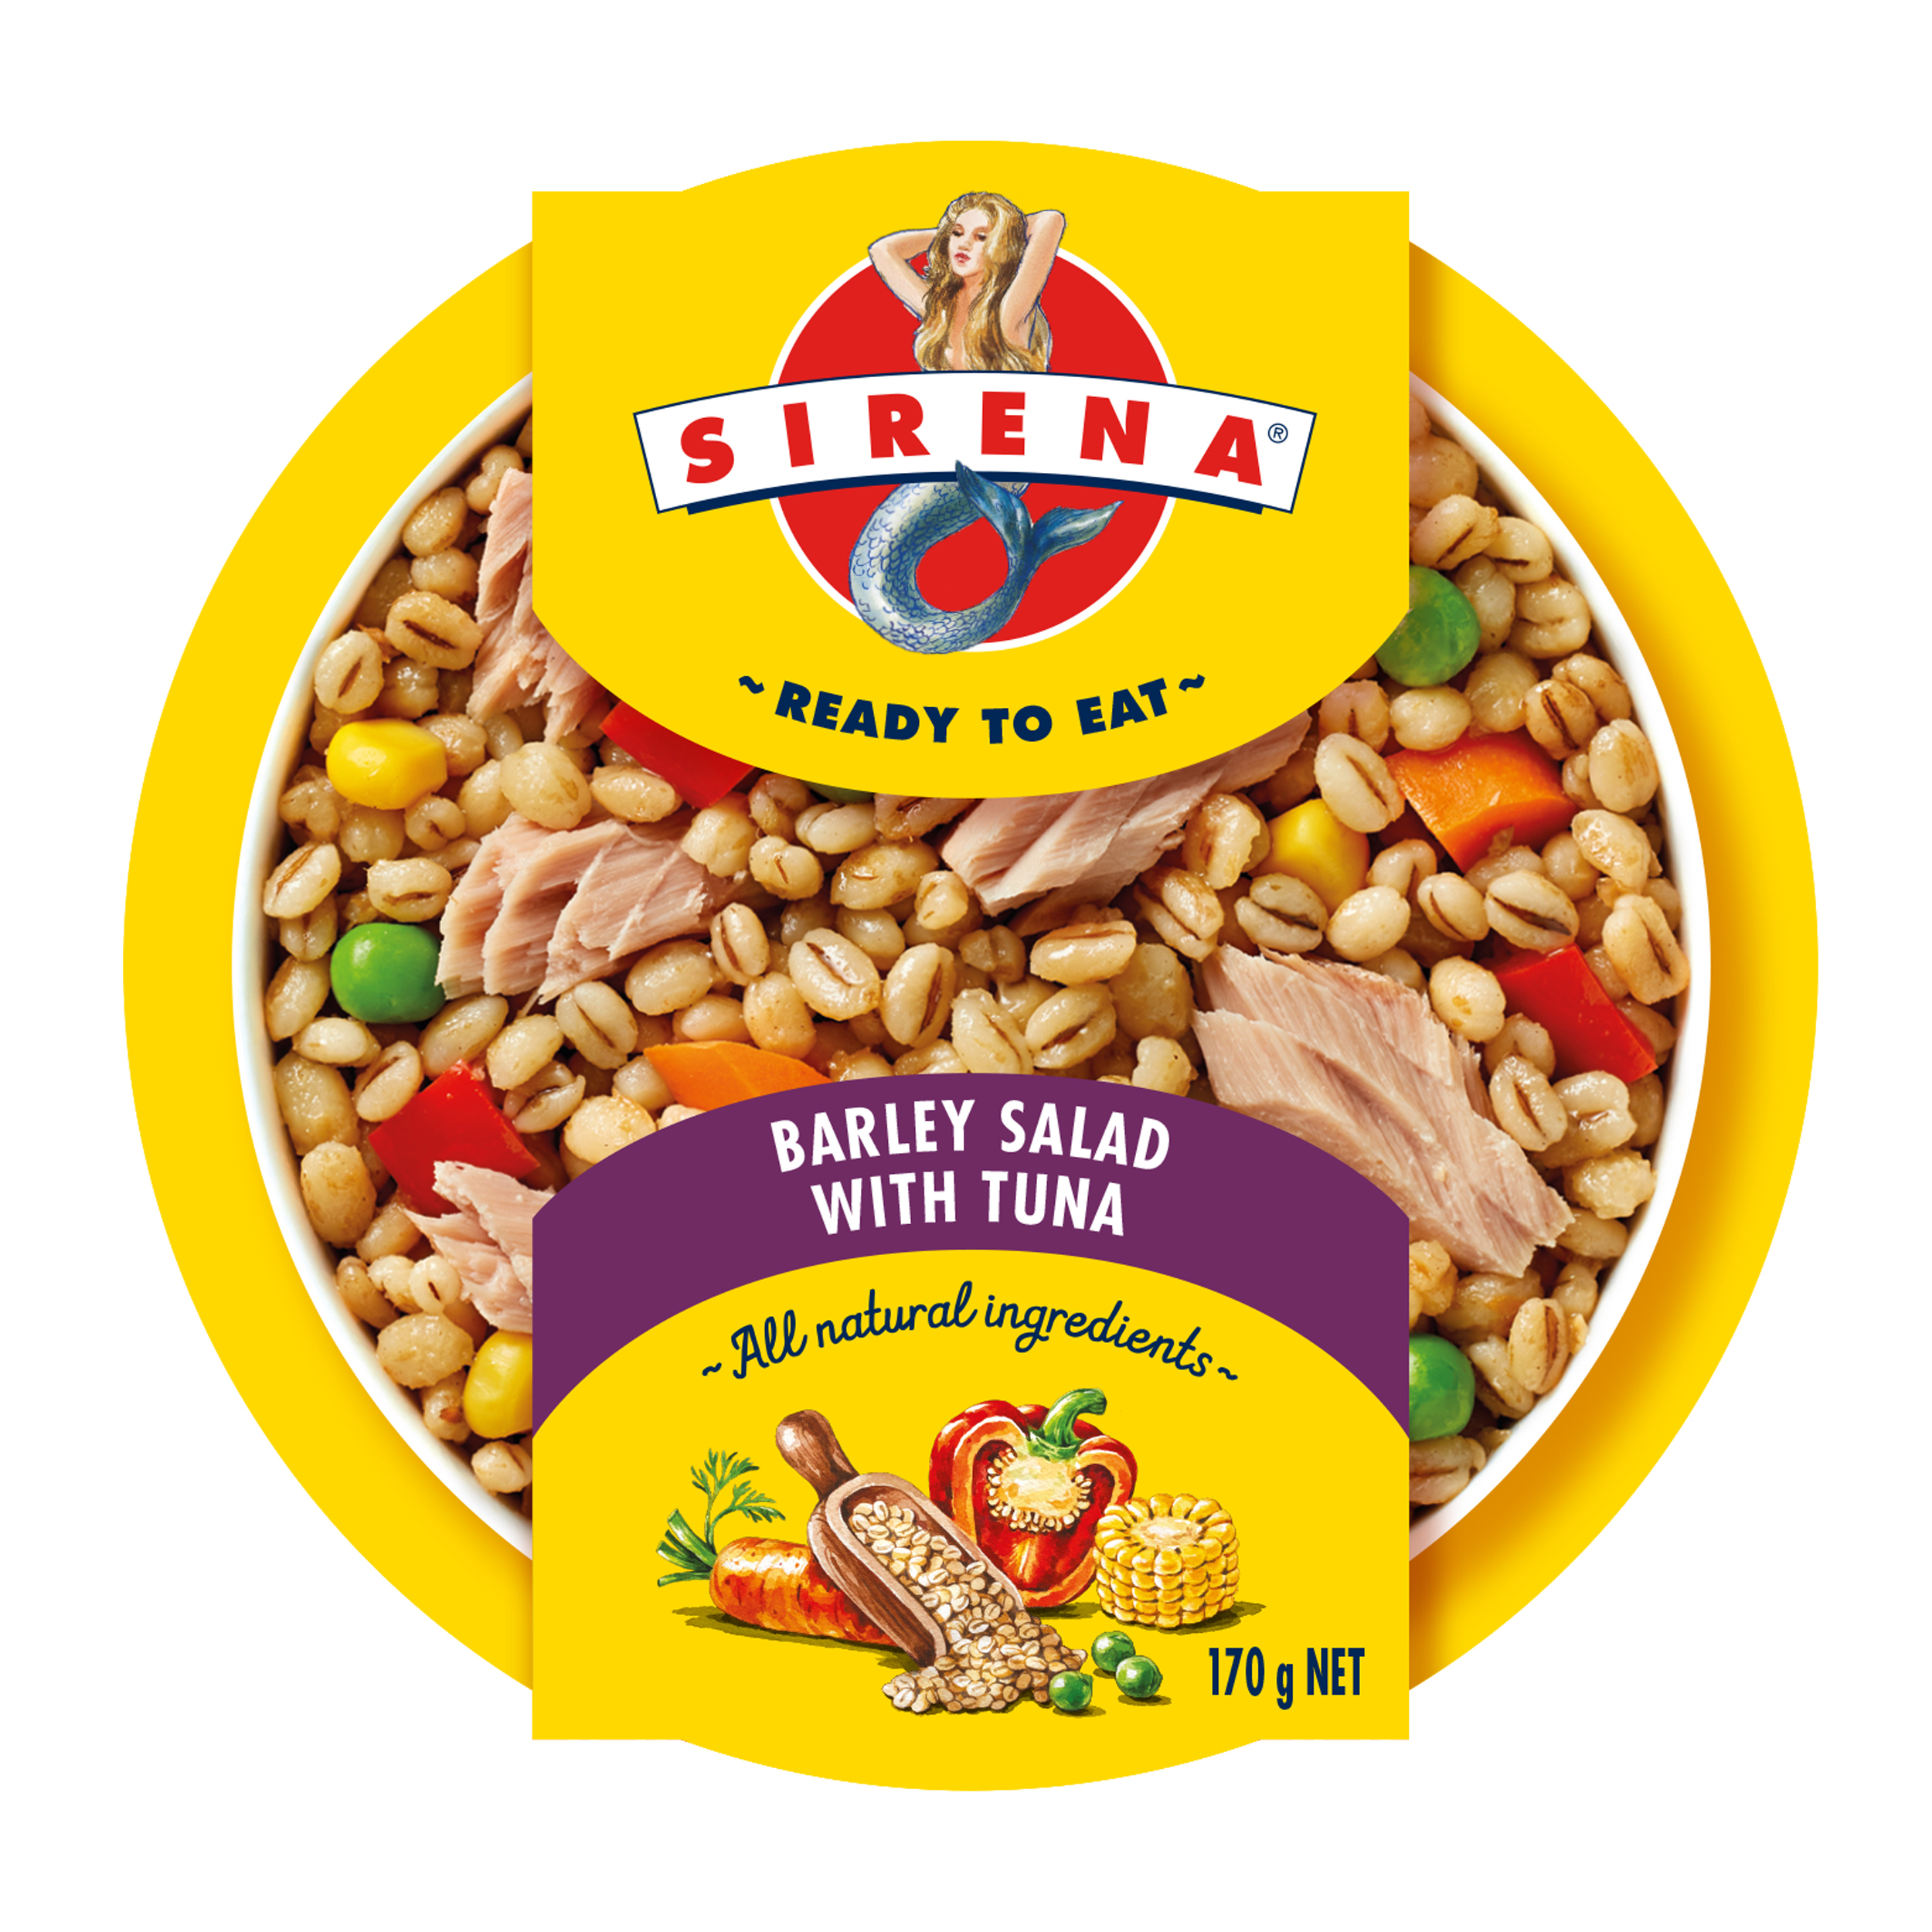 Sirena Ready to Eat Barley Salad with Tuna